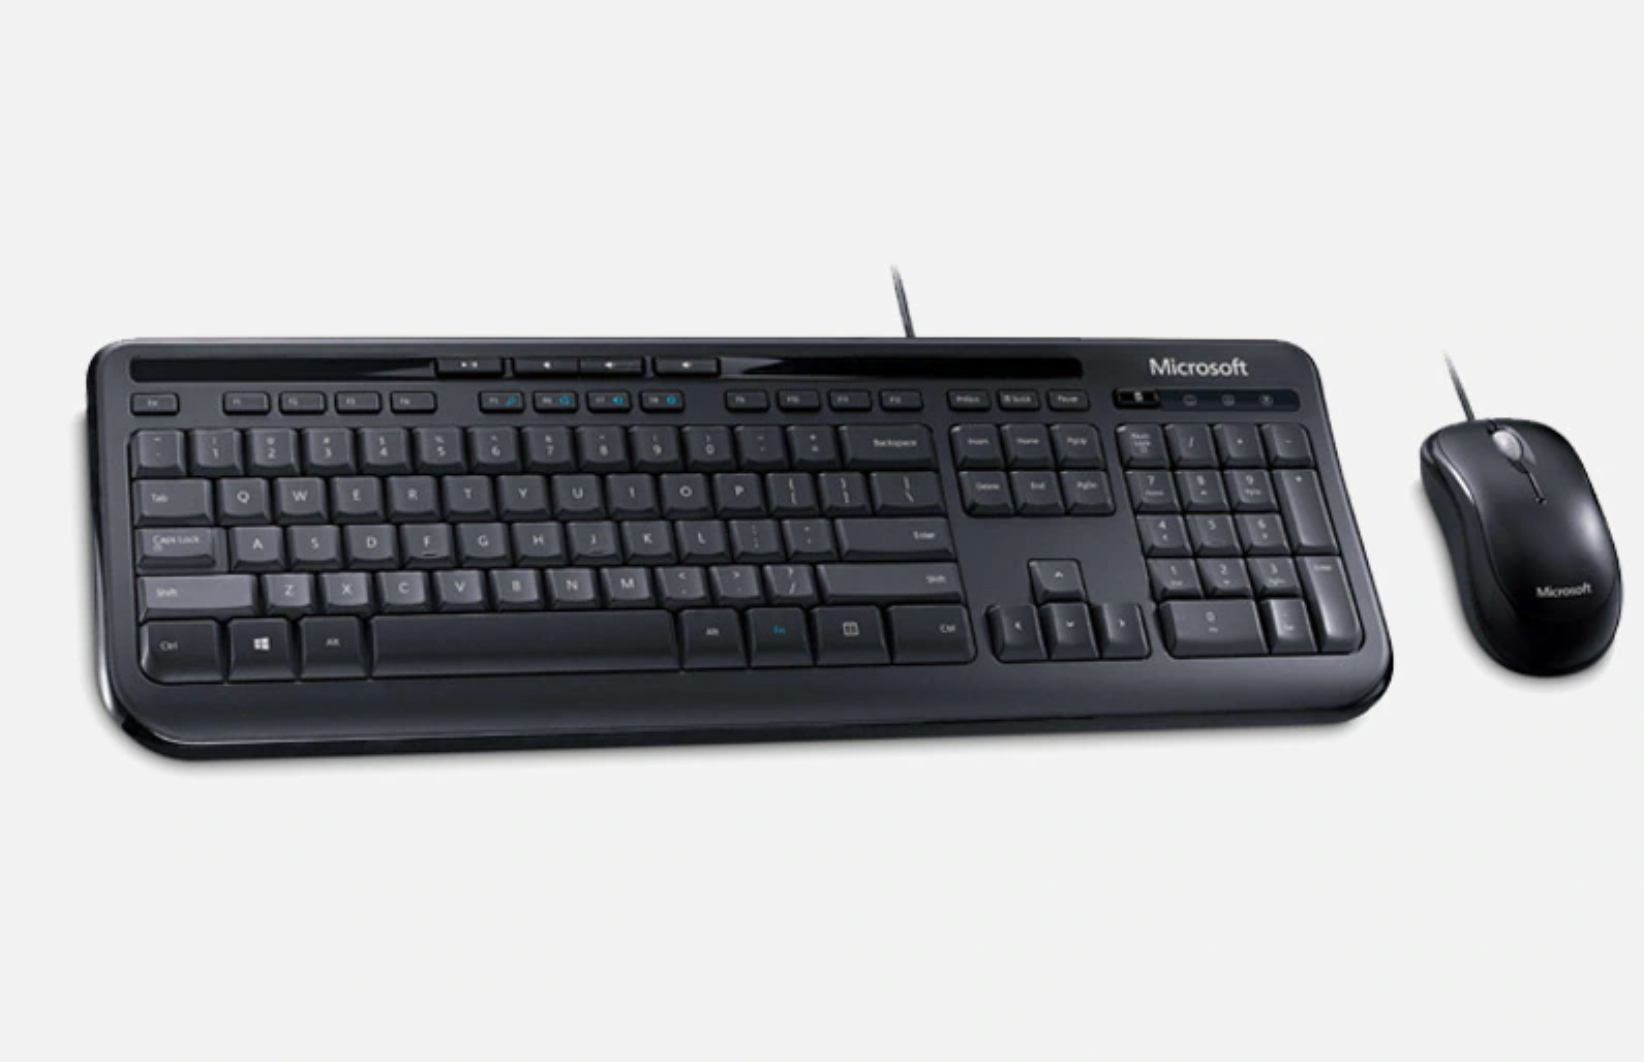 Комплект (клавиатура+мышь) Microsoft Wired Desktop 600 для PC от 1С Интерес